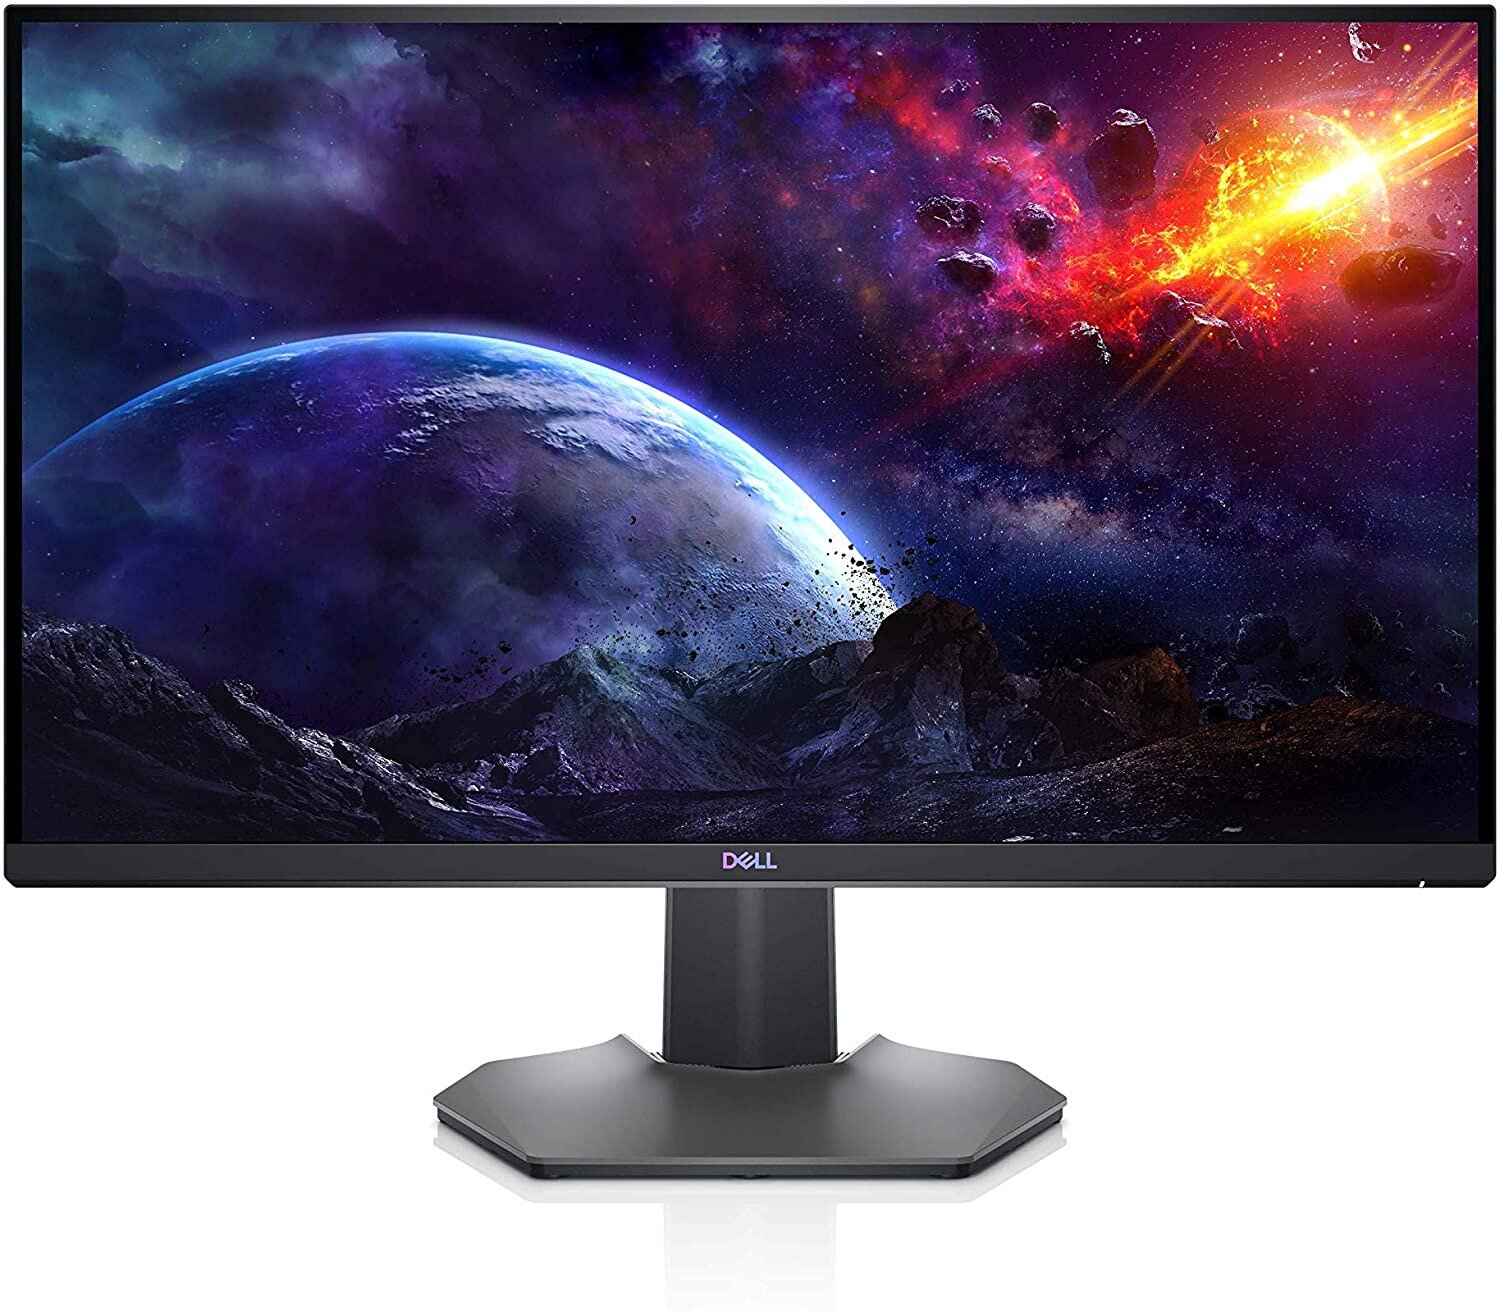 Buy Dell 27 LED-Backlit LCD Gaming Monitor - S2721DGF online in UAE